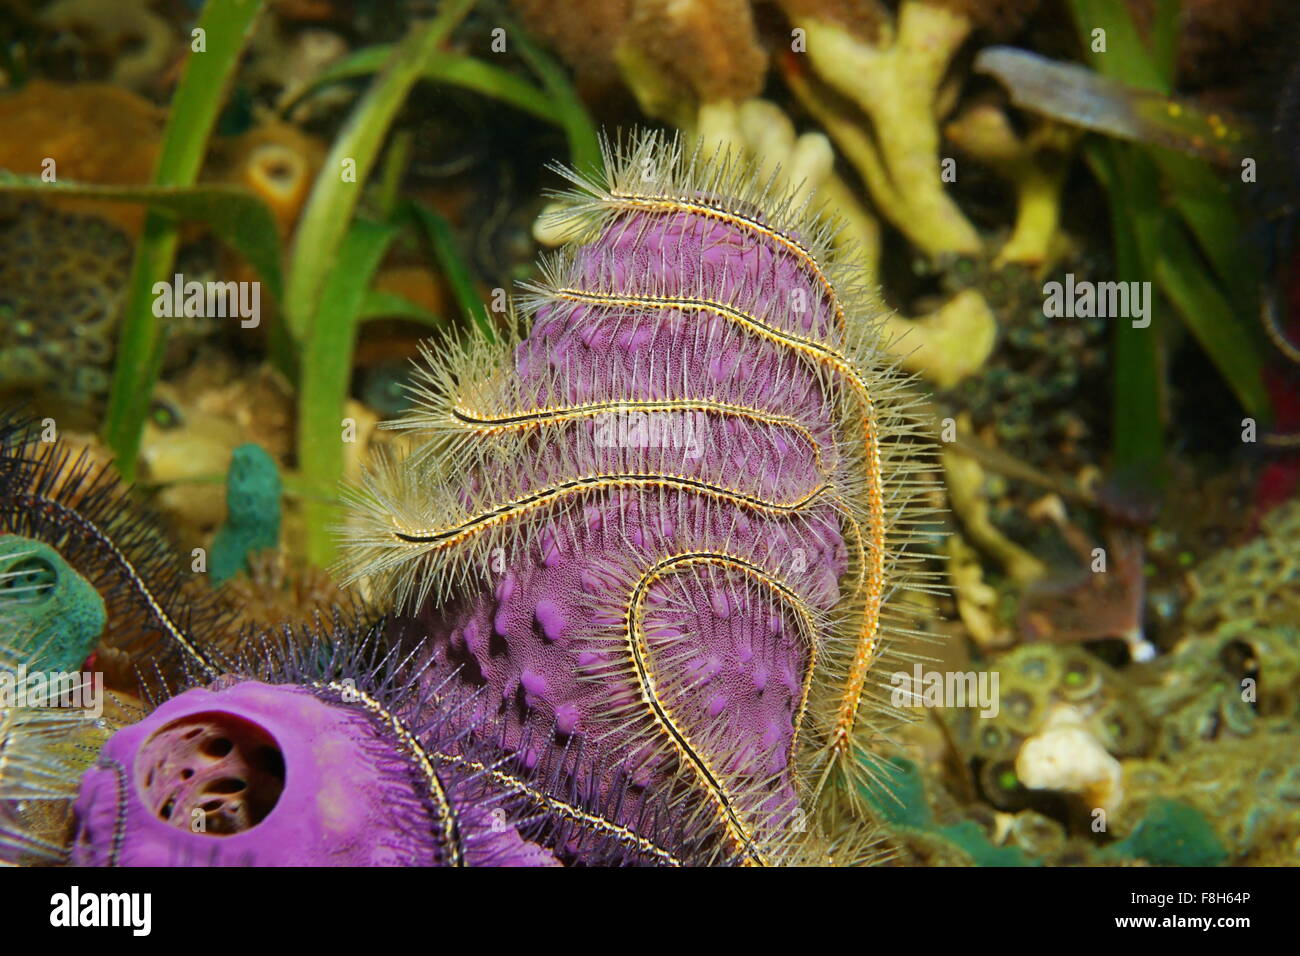 Tentacles of a sponge brittle star, around branching tube sponge, Caribbean sea, Panama, Central America Stock Photo